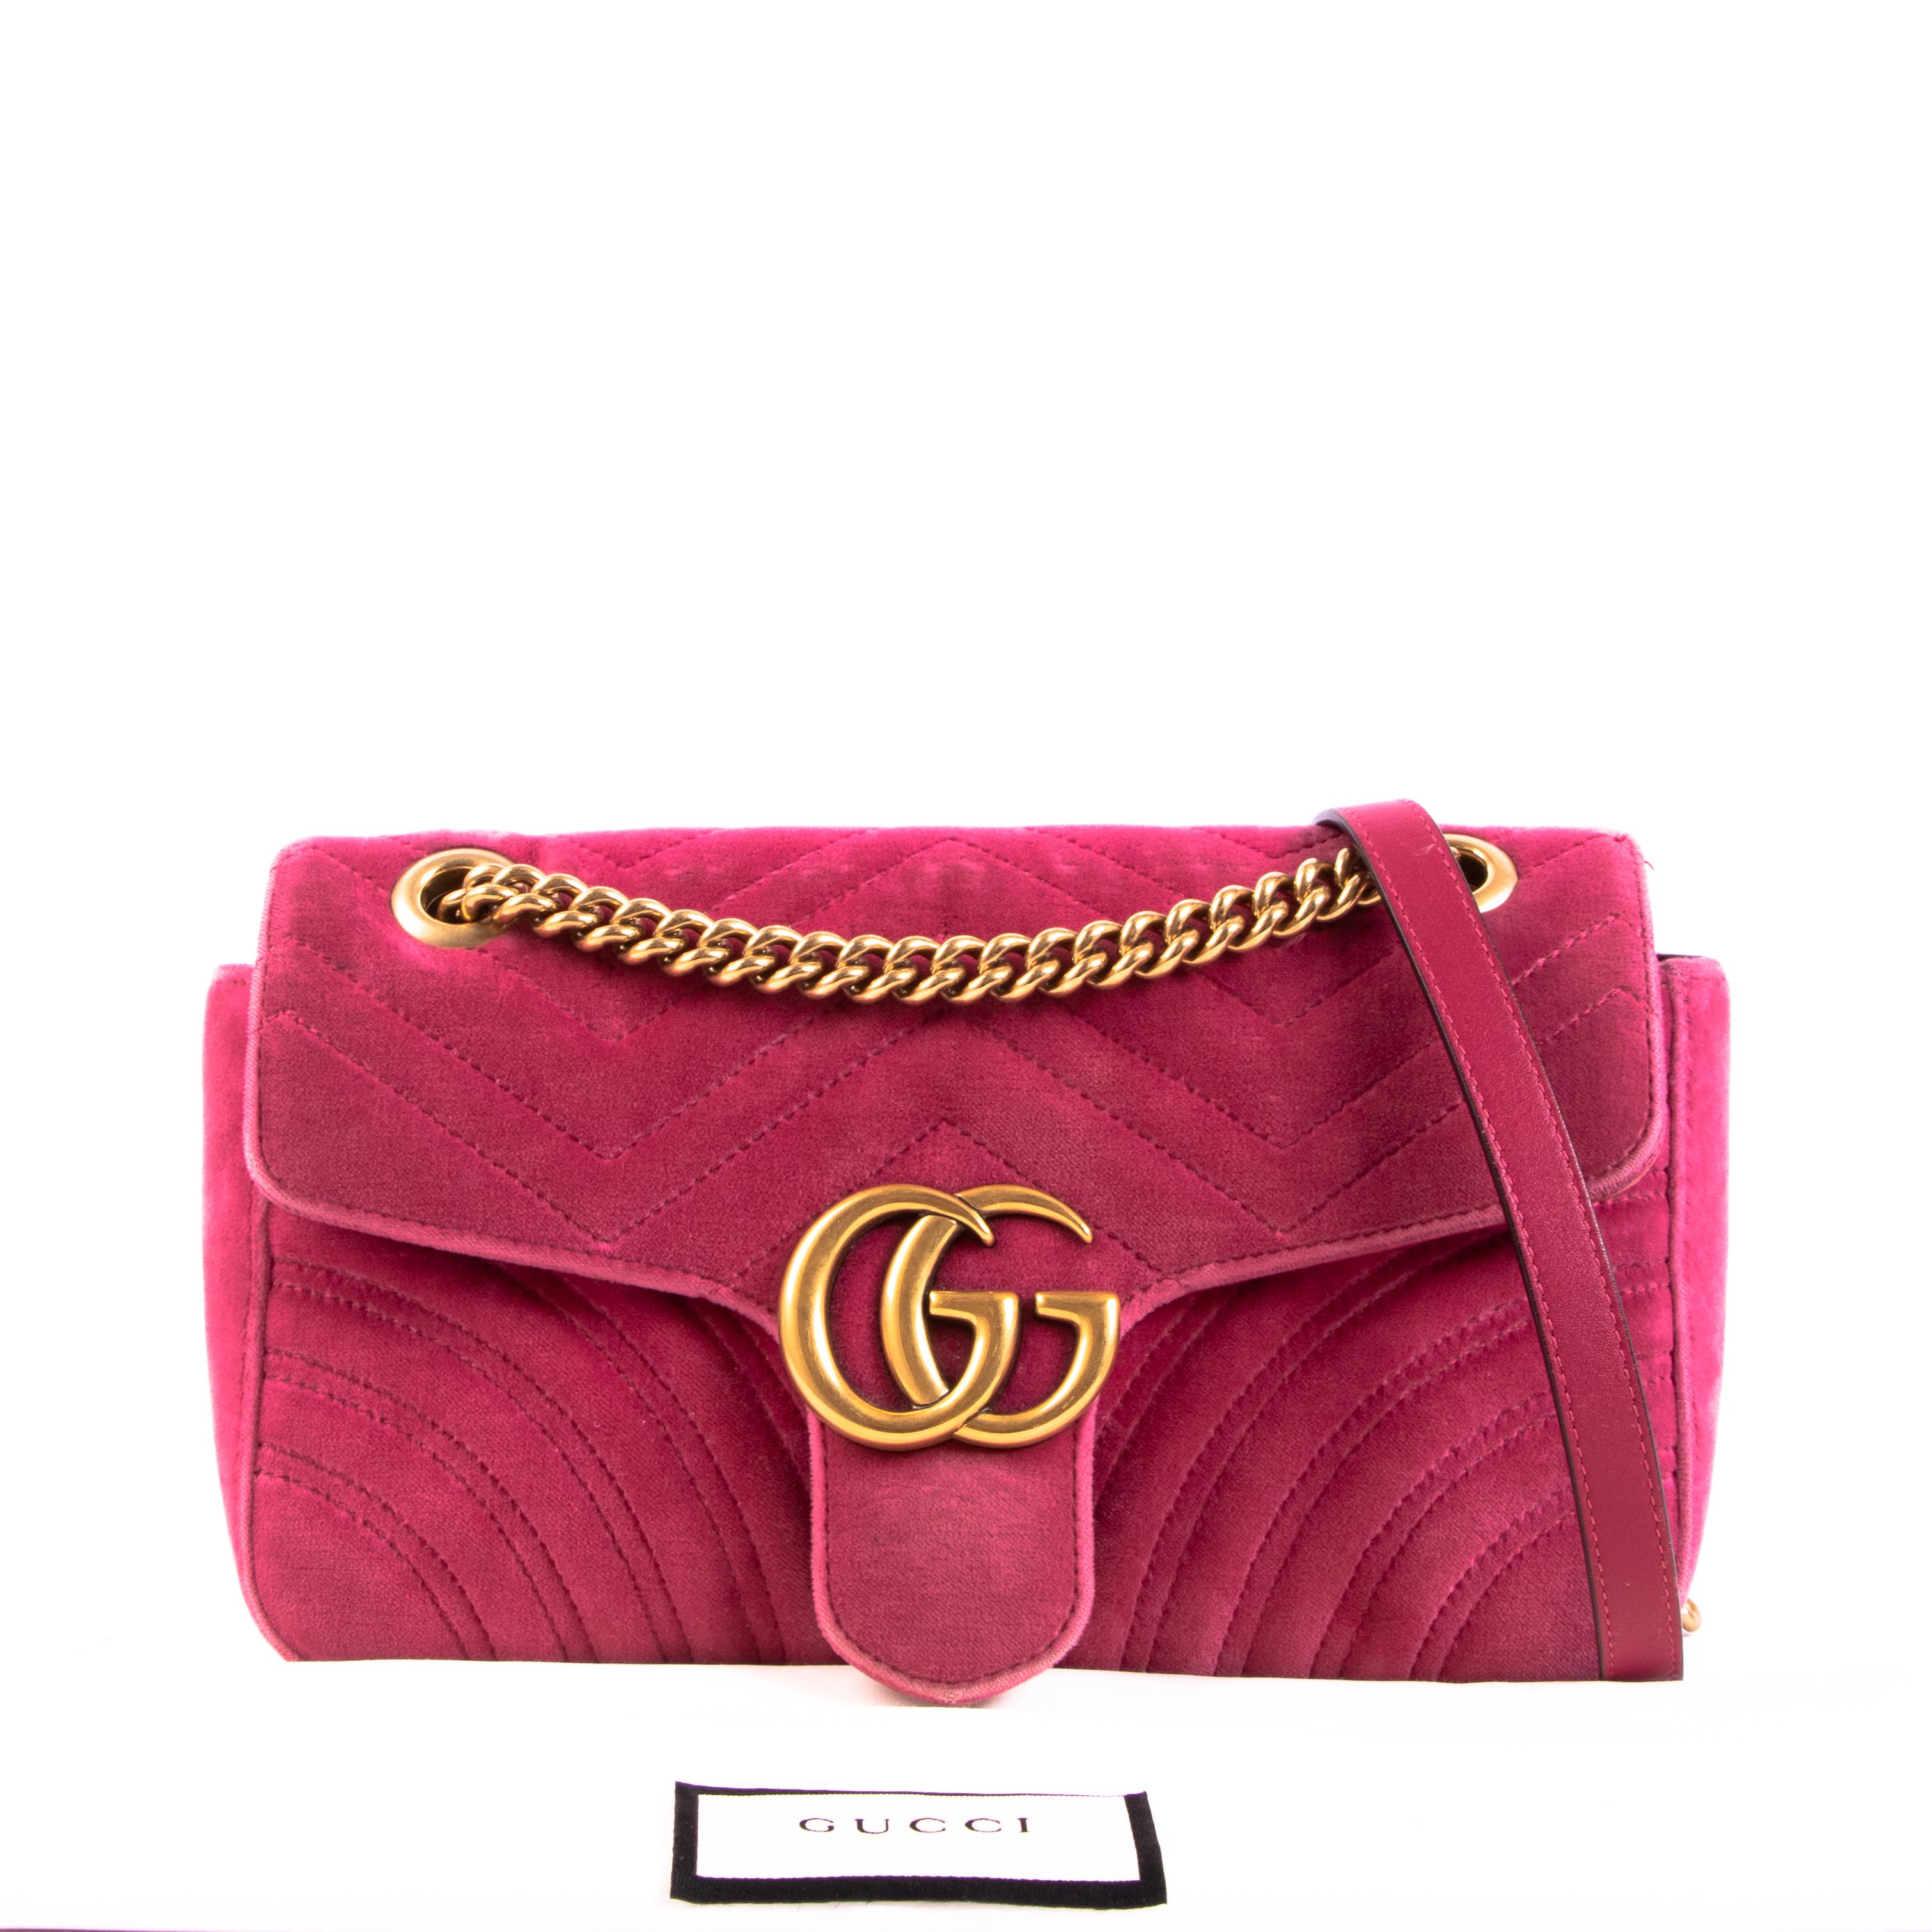 pink velvet purse